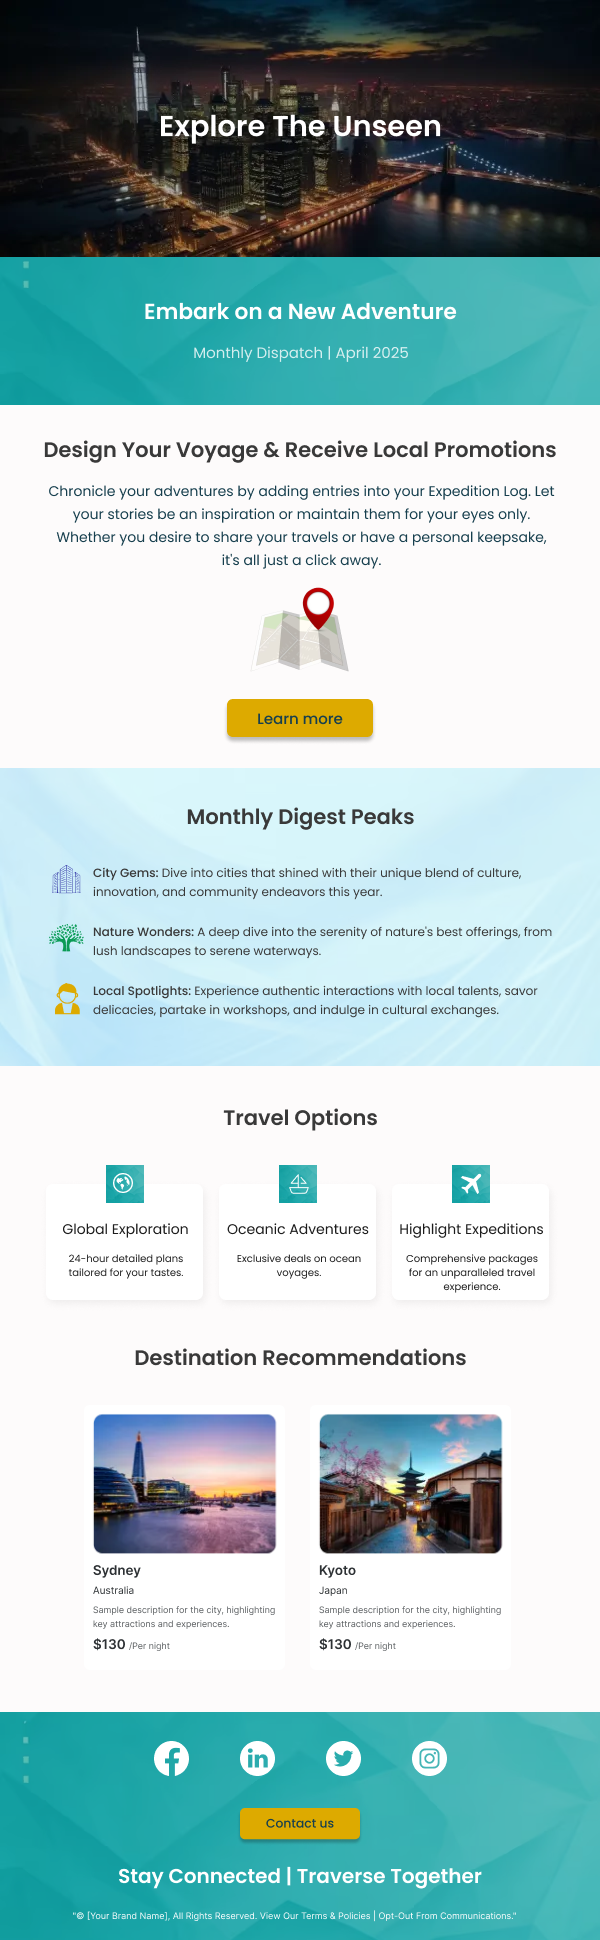 Travel-Monthly Digest Peaks